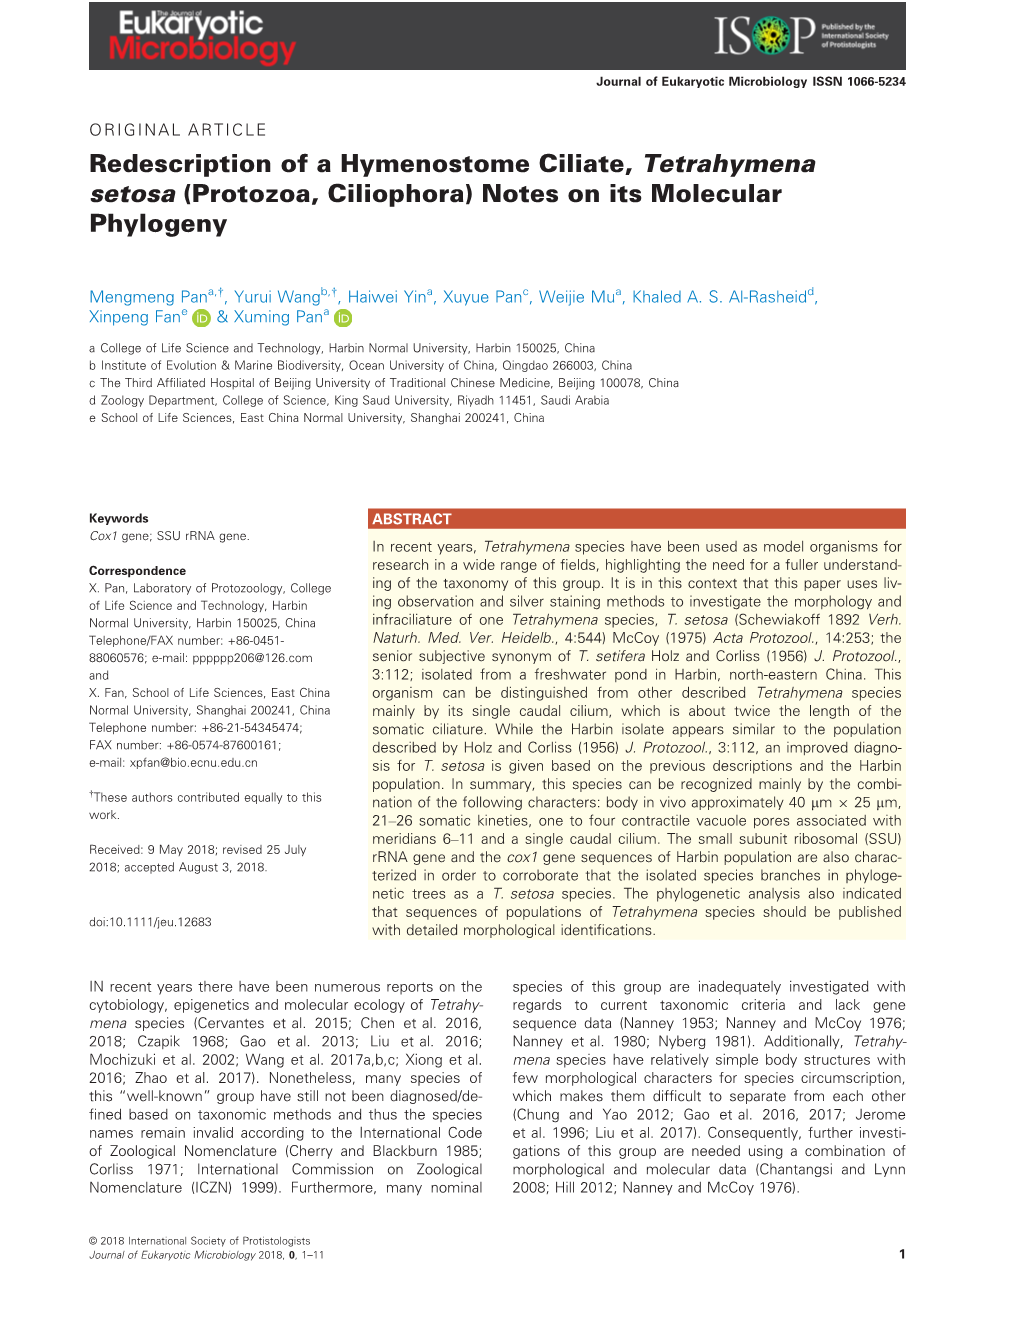 Redescription of a Hymenostome Ciliate, Tetrahymena Setosa (Protozoa, Ciliophora) Notes on Its Molecular Phylogeny